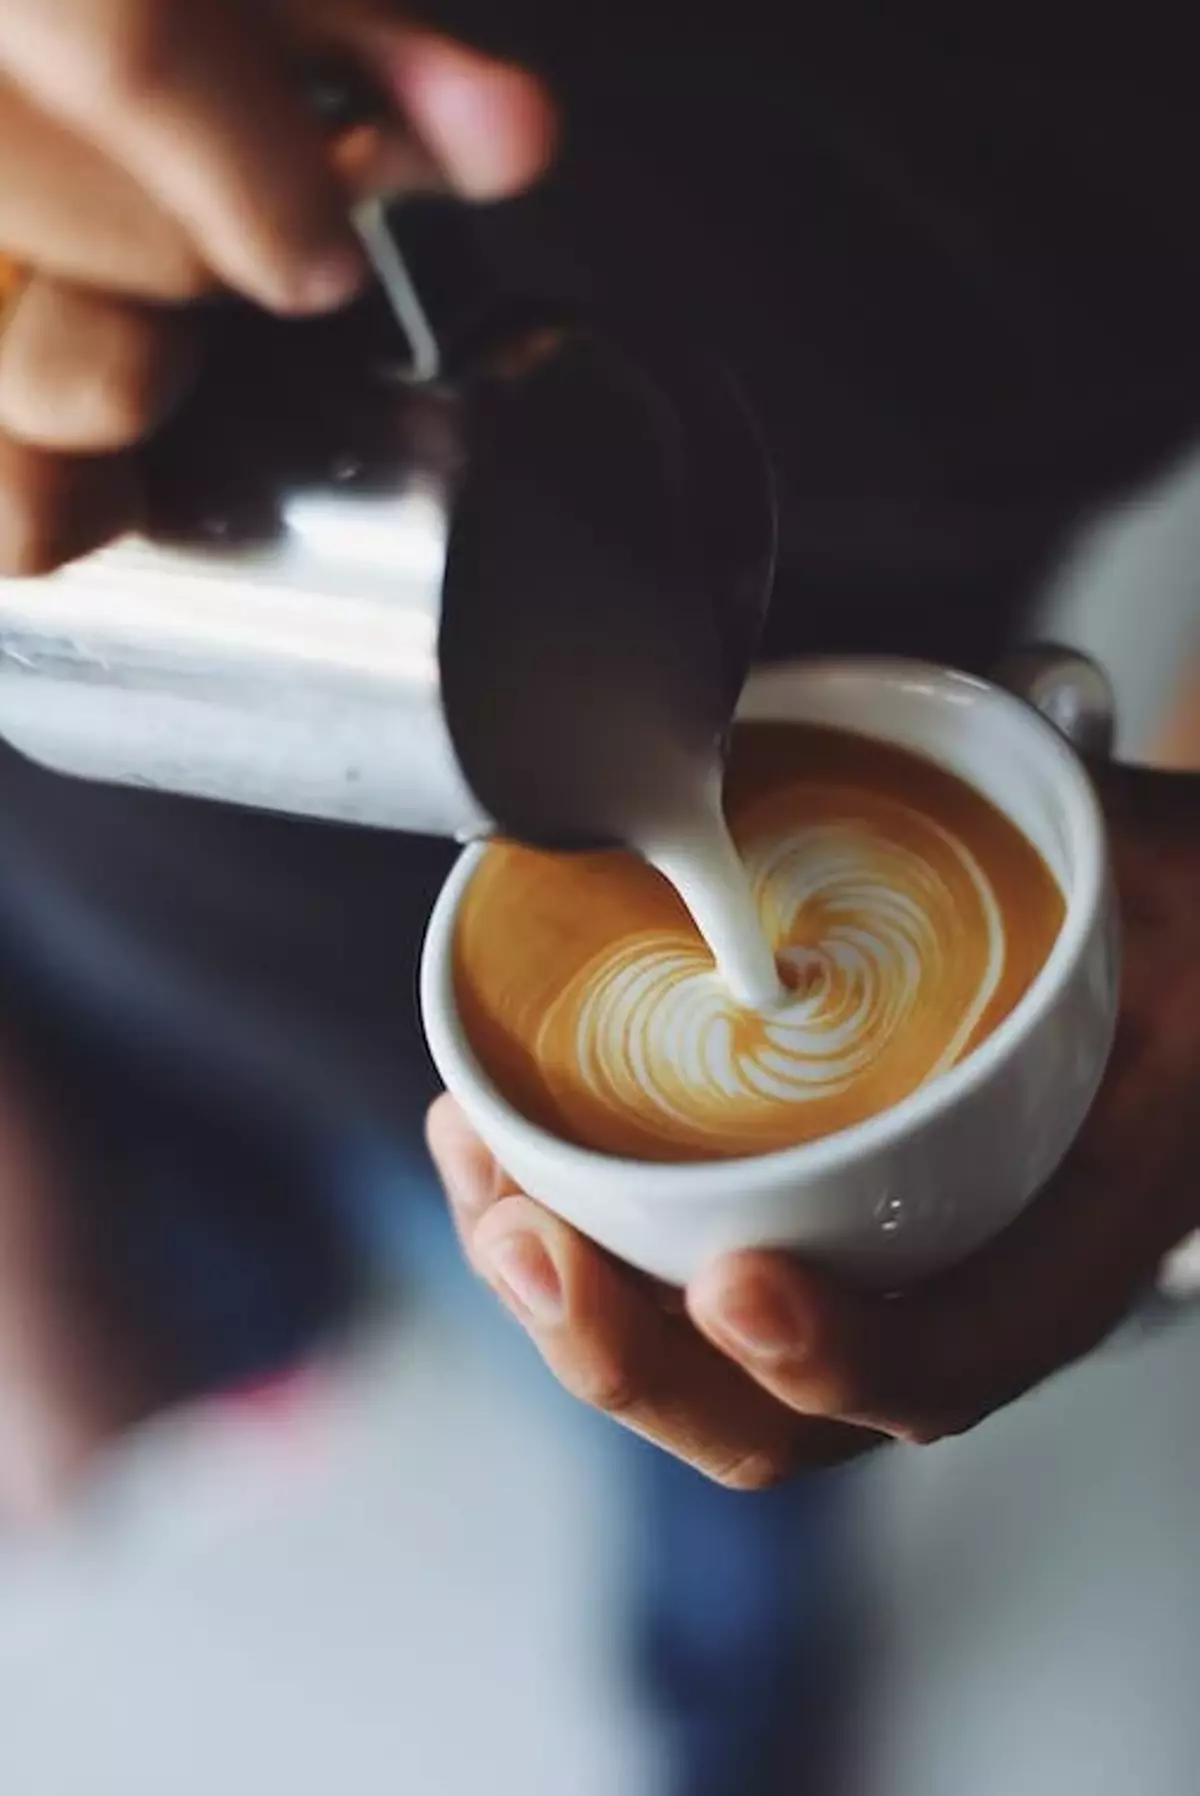 ESPUMADOR DE LECHE LIDL  ¿Eres un amante del café? Descubre el nuevo  espumador de leche de Lidl